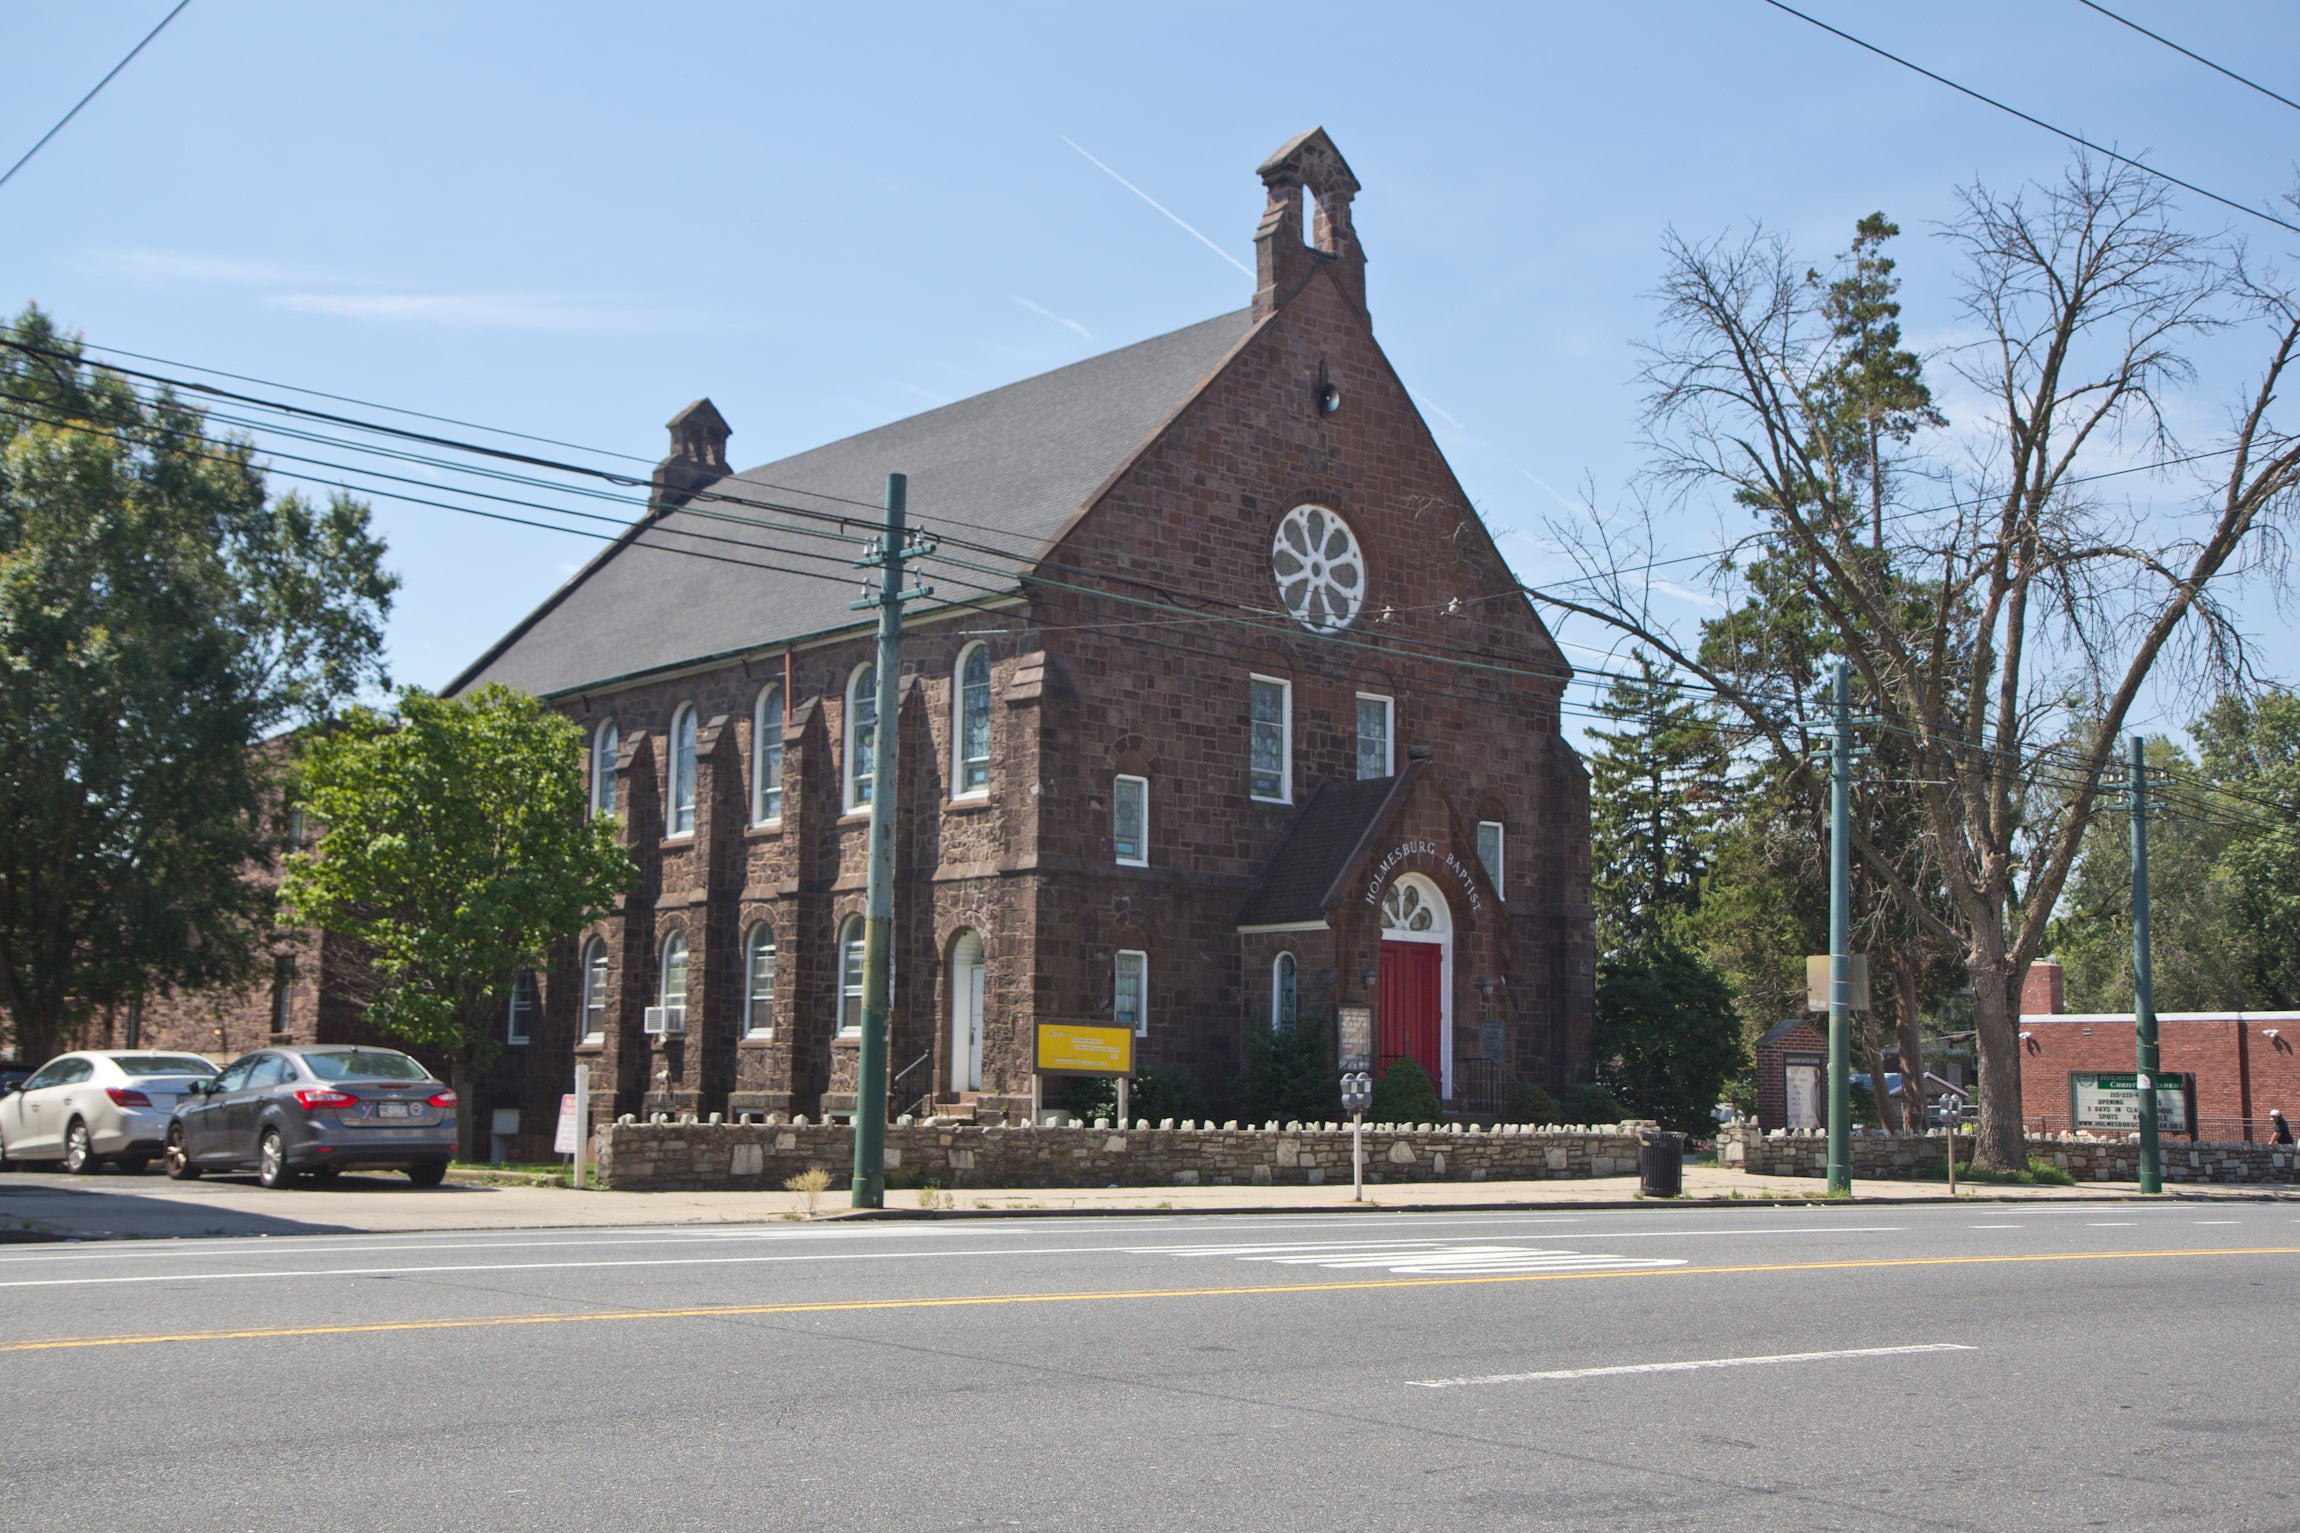 Holmesburg Christian Academy